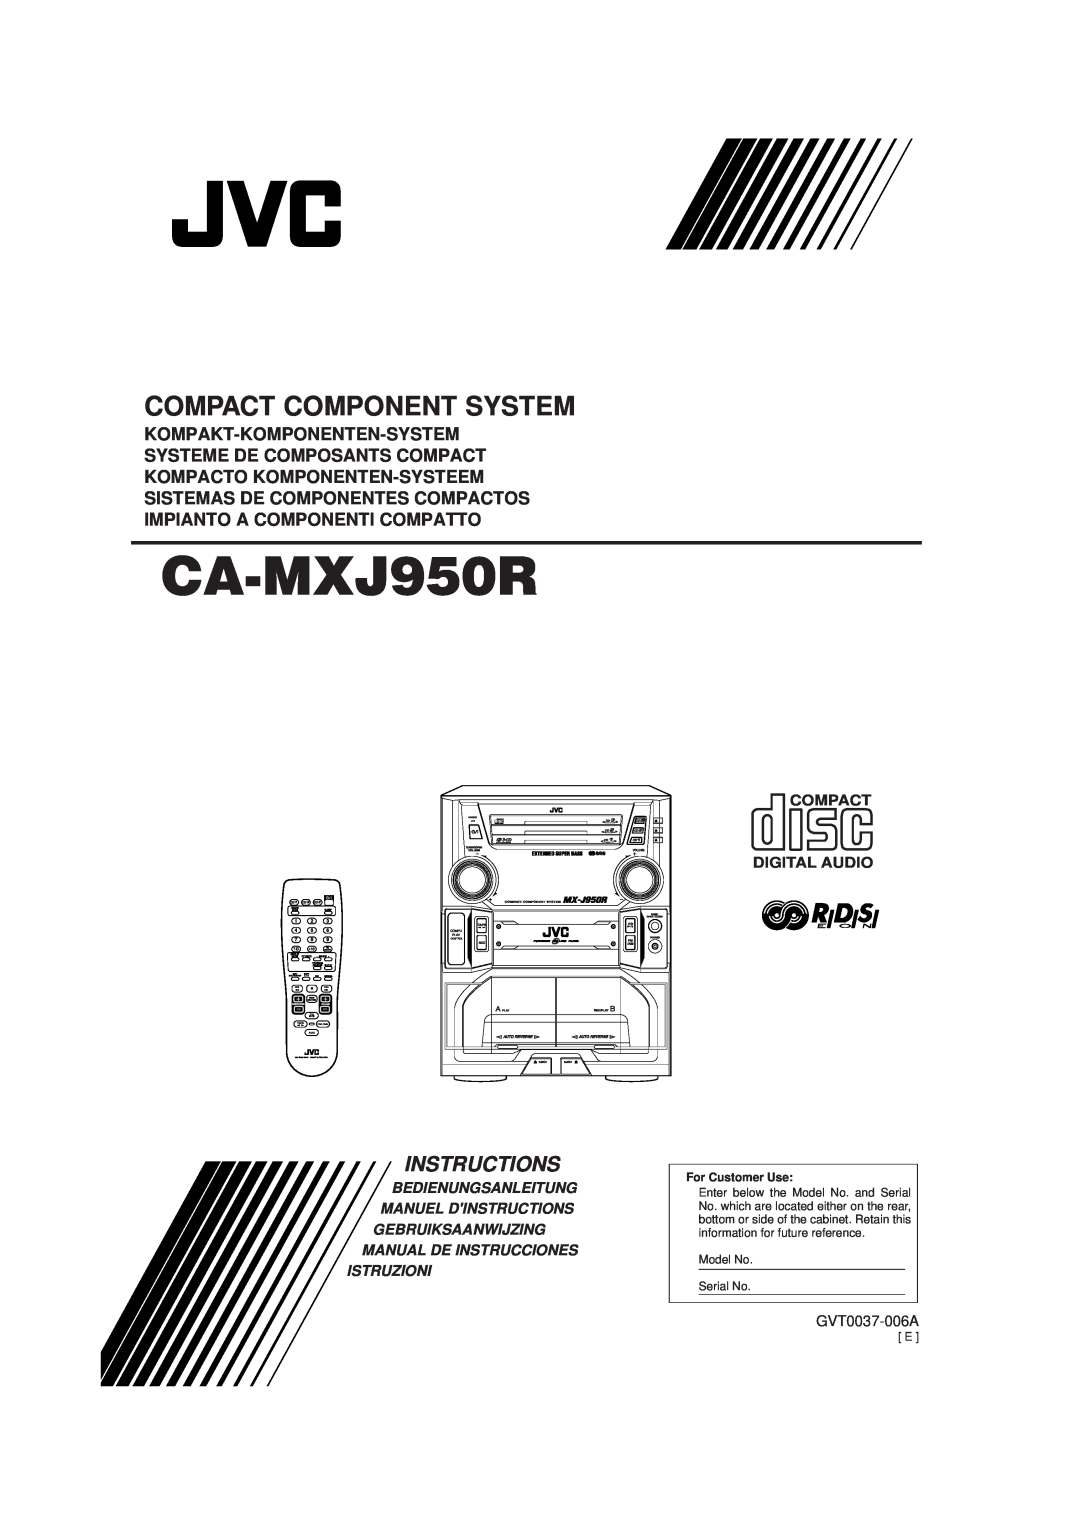 JVC CA-MXJ950R manual Digital Audio, Compact Component System, Instructions, Bedienungsanleitung, Manuel Dinstructions 